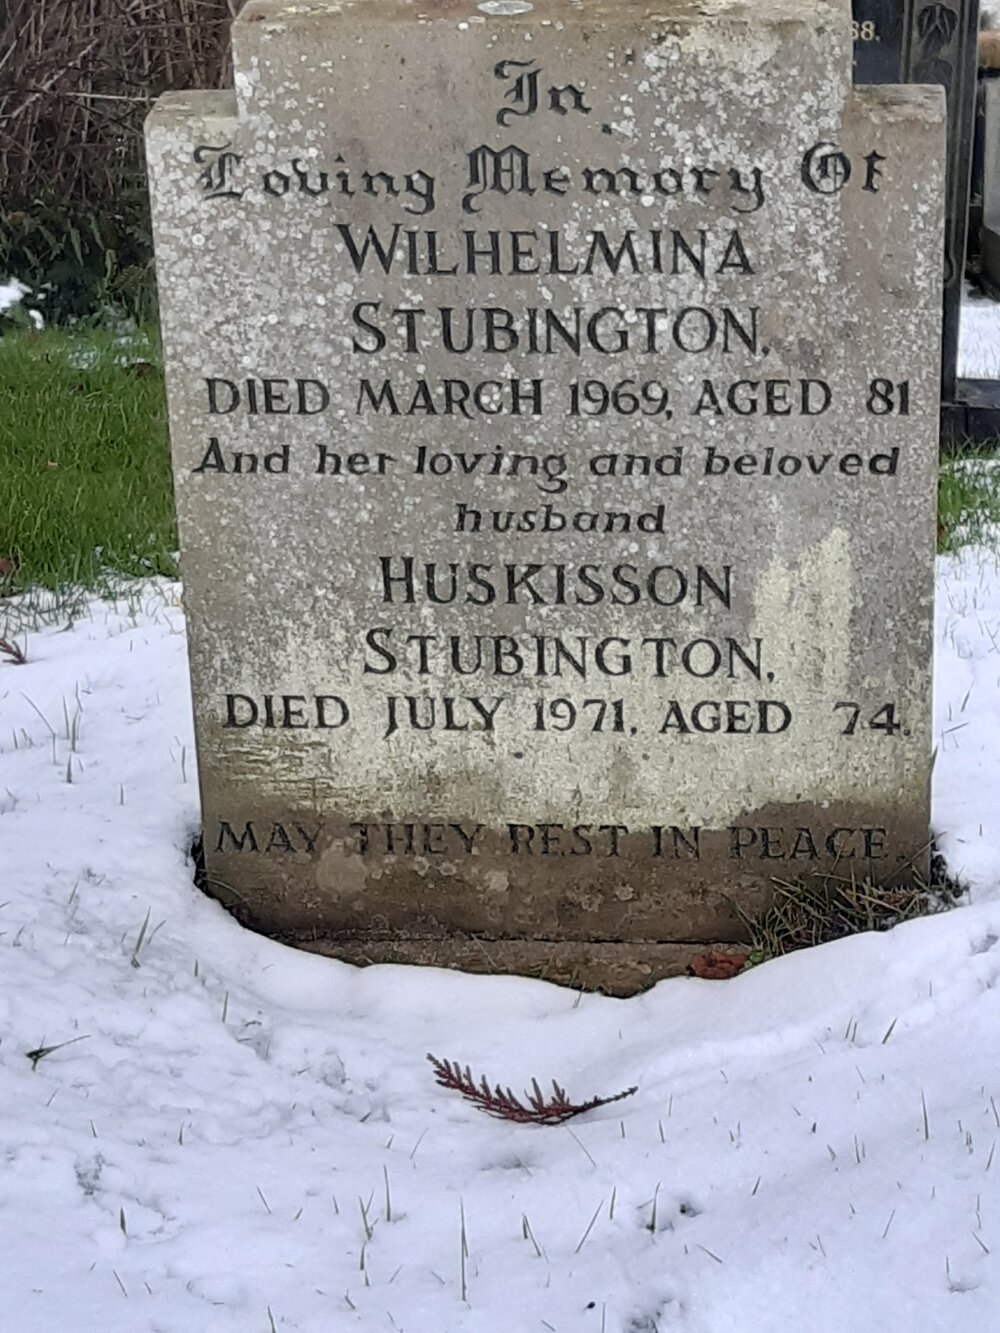 Headstone in Presteigne Cemetery